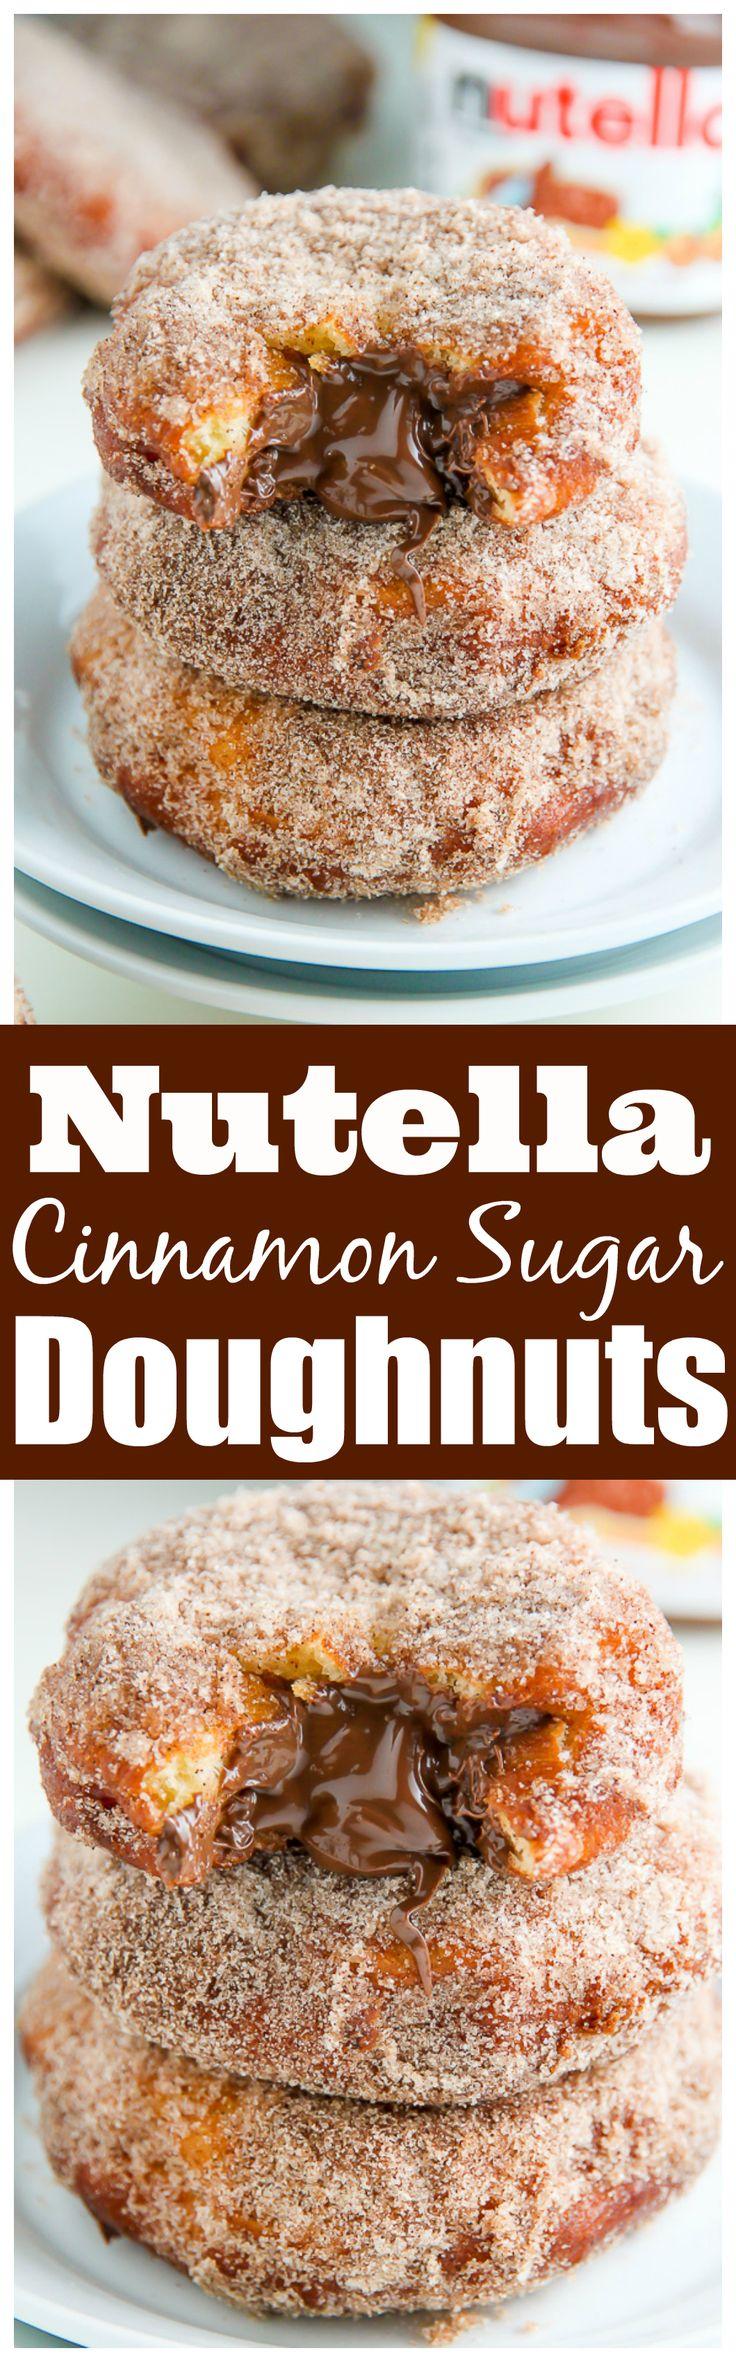 Hochzeit - Nutella Cinnamon Sugar Doughnuts